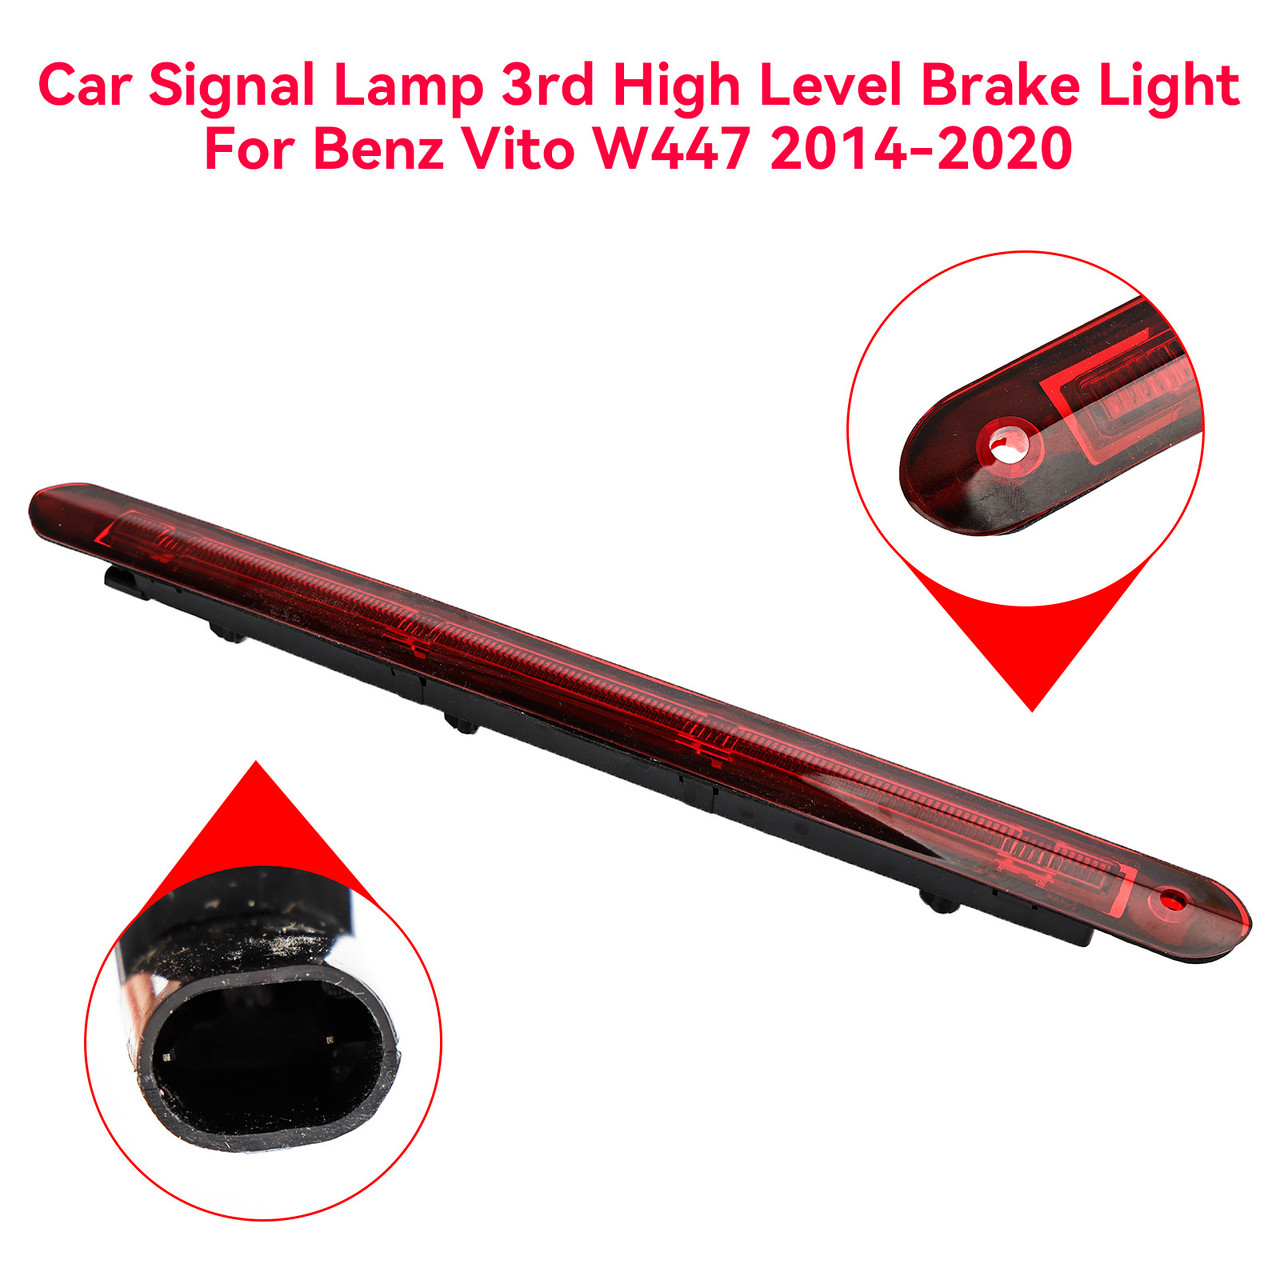 Car Signal Lamp 3rd High Level Brake Light For Benz Vito W447 2014-2020